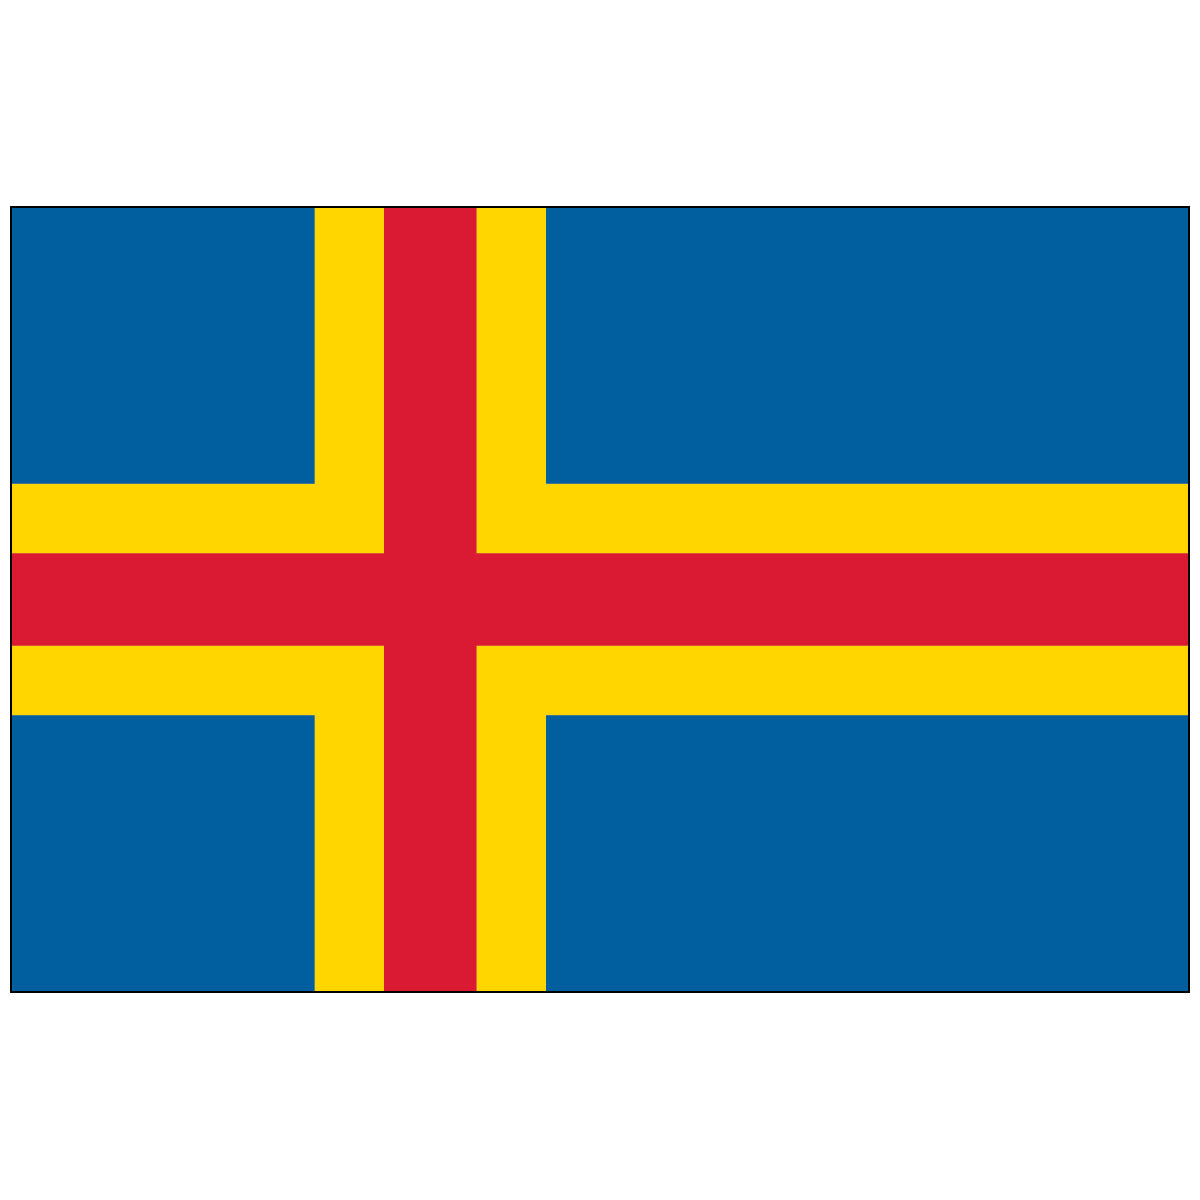 Aland Island - World Flag